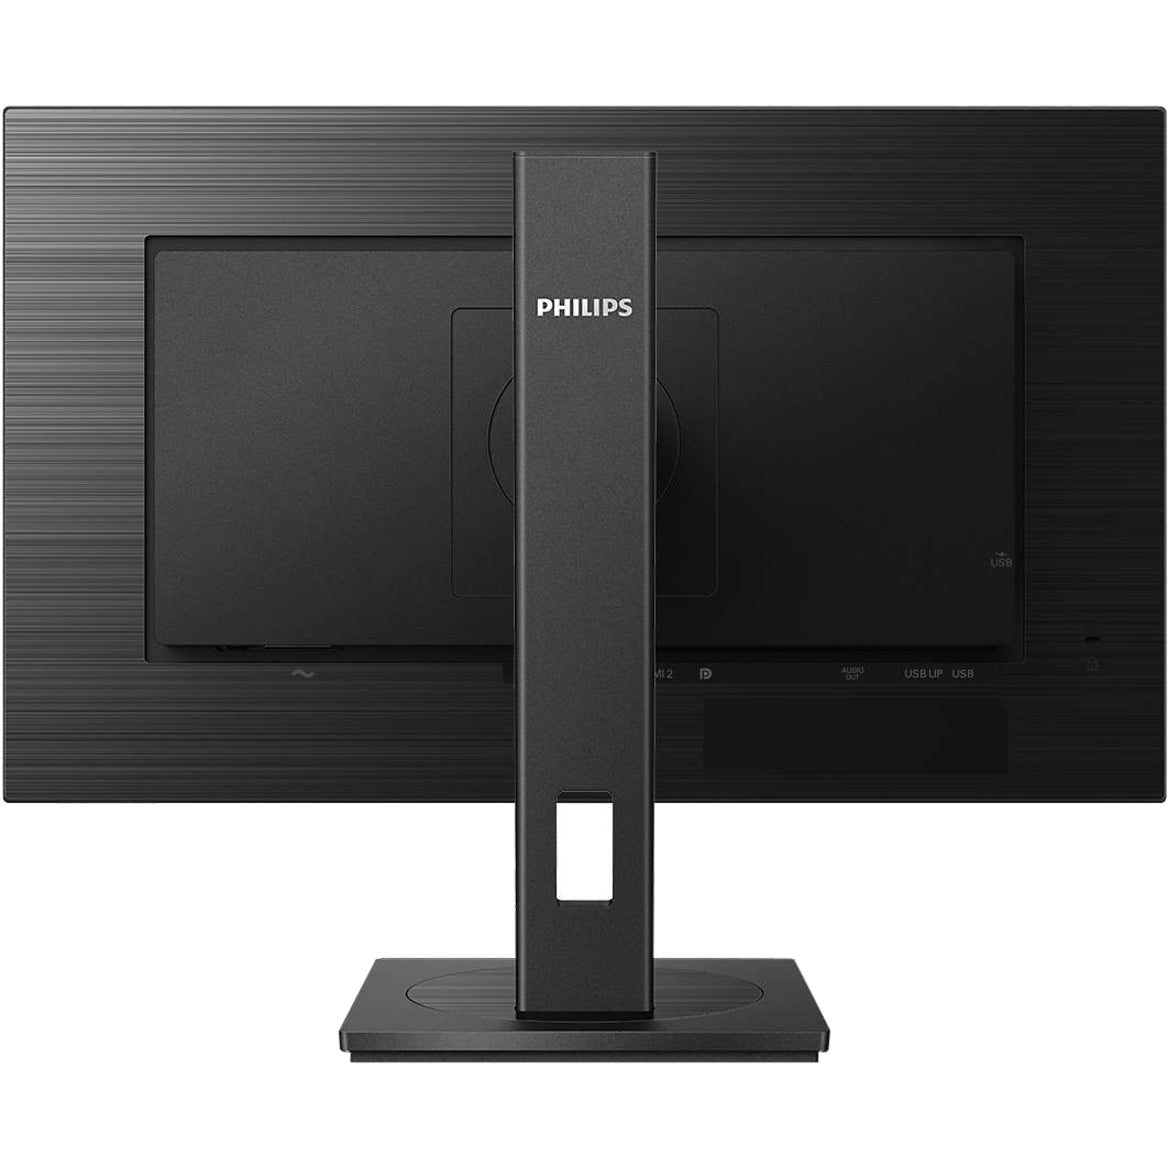 Philips 278B1 27" 4K UHD LCD Monitor - 16:9 - Textured Black